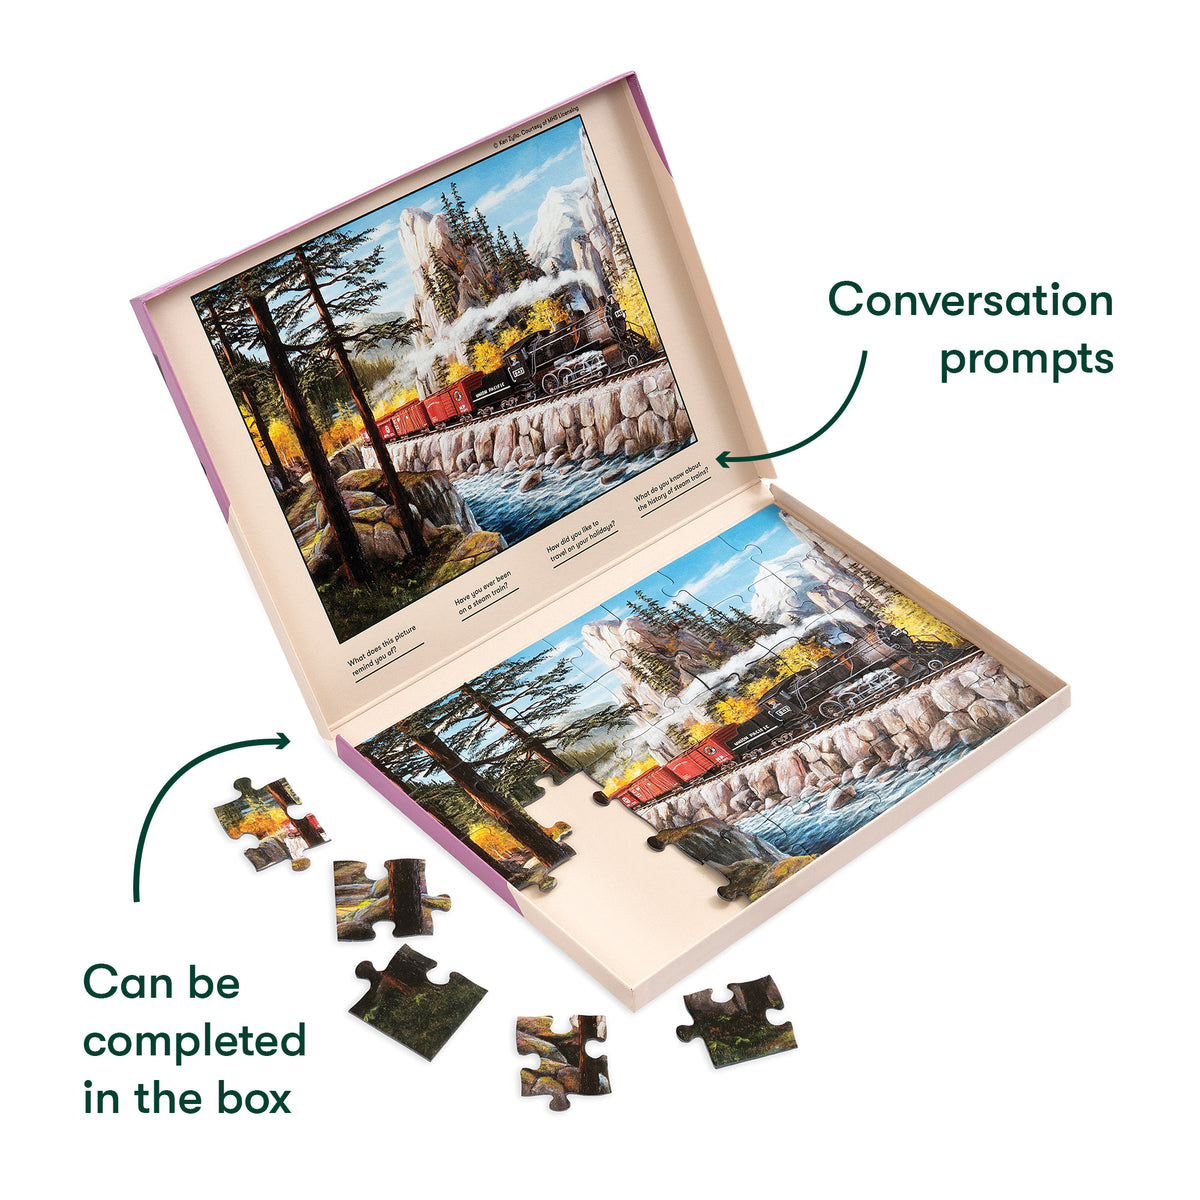 35 Piece Jigsaw Puzzle - Steam Train - VAT Free